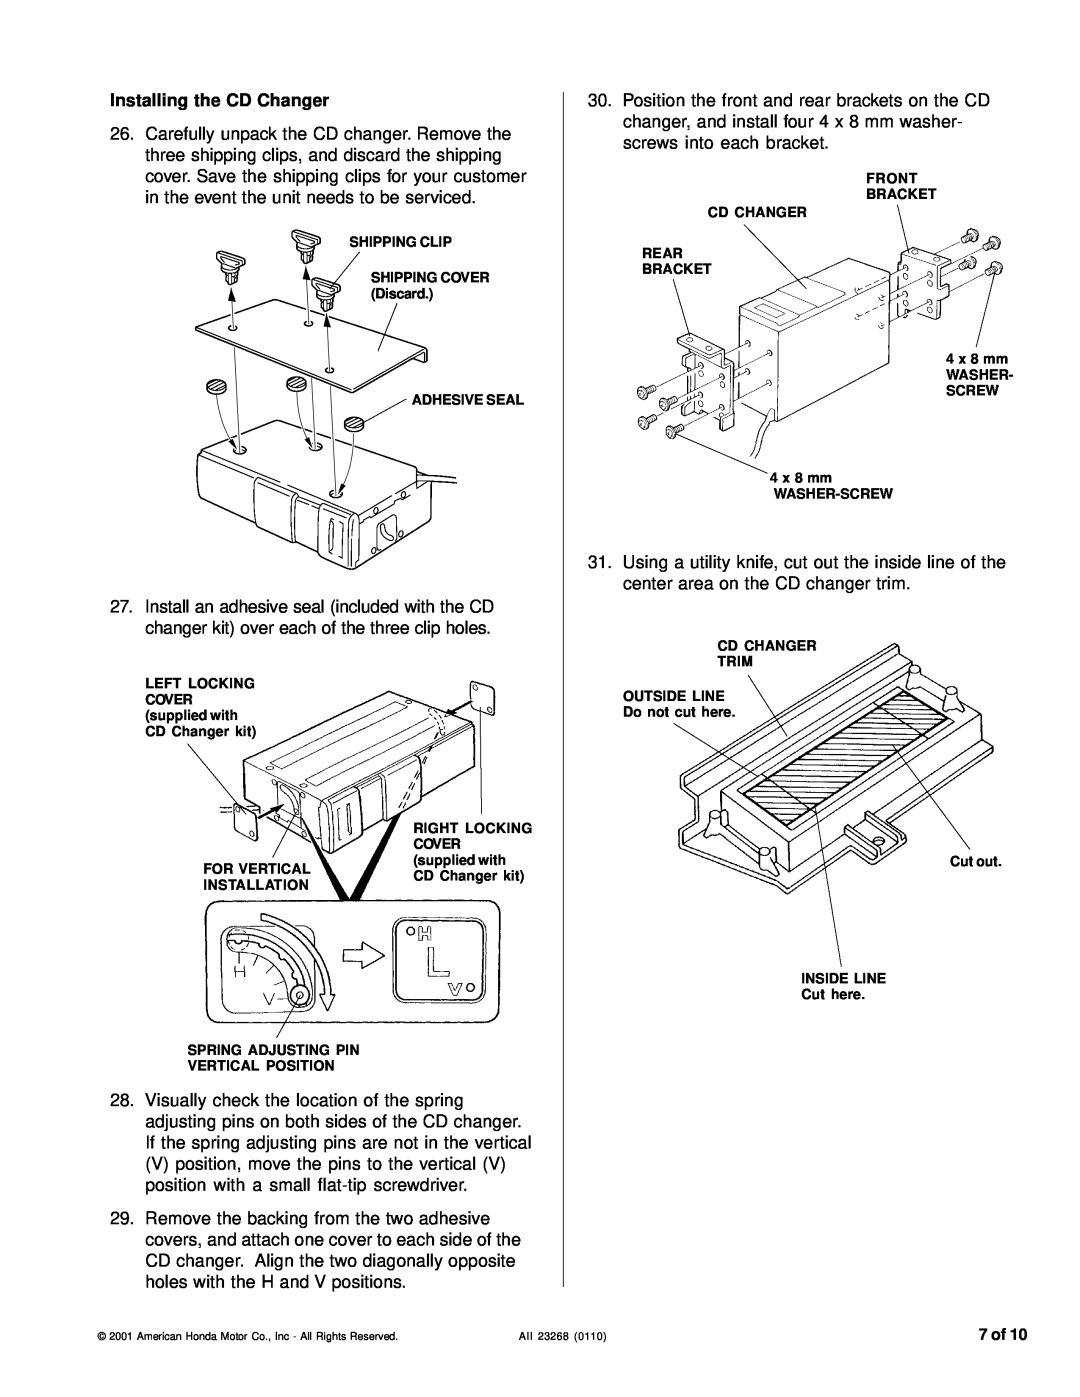 Honda Power Equipment installation instructions Installing the CD Changer 